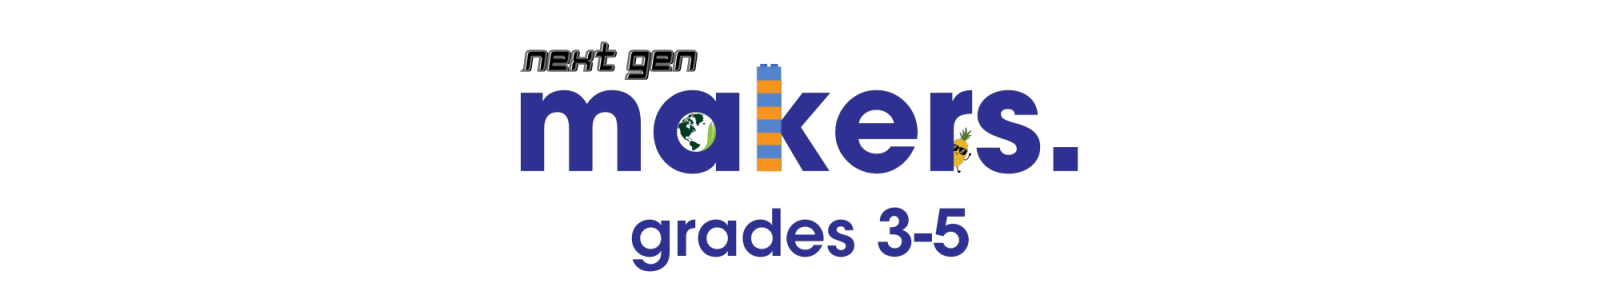 Next Gen Makers Summer Camp Grades 3-5